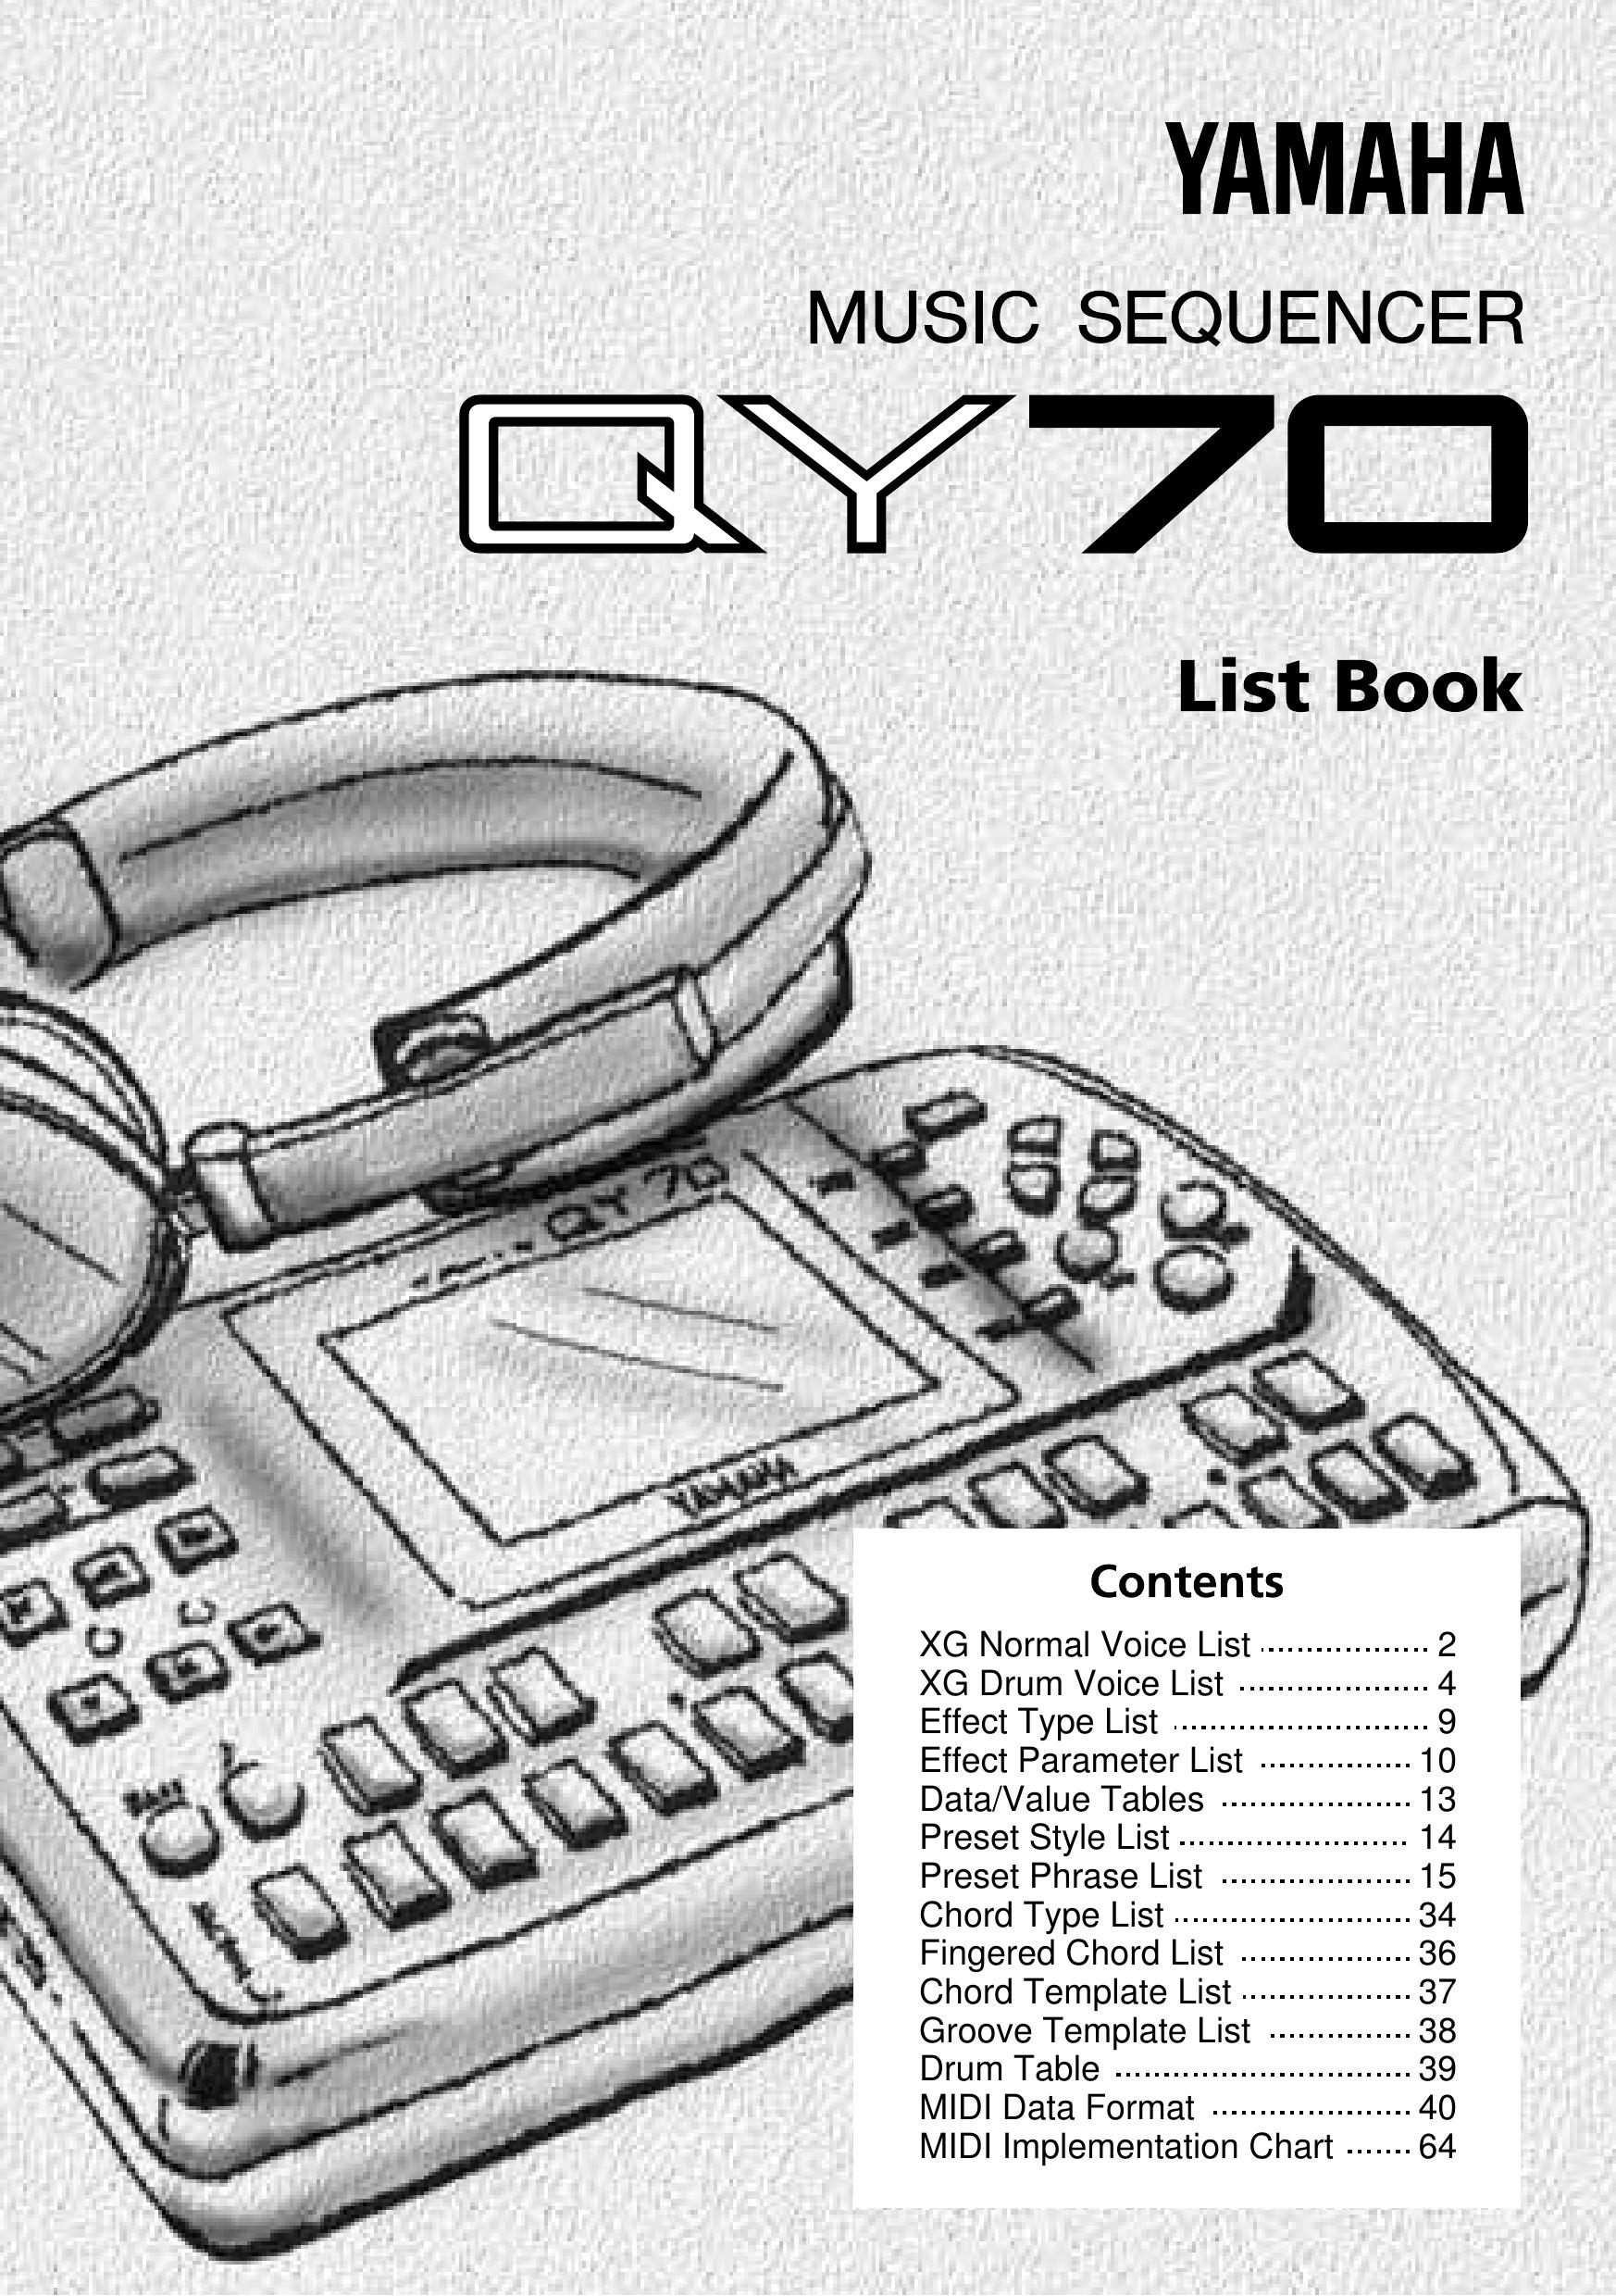 Yamaha QY70 Recording Equipment User Manual